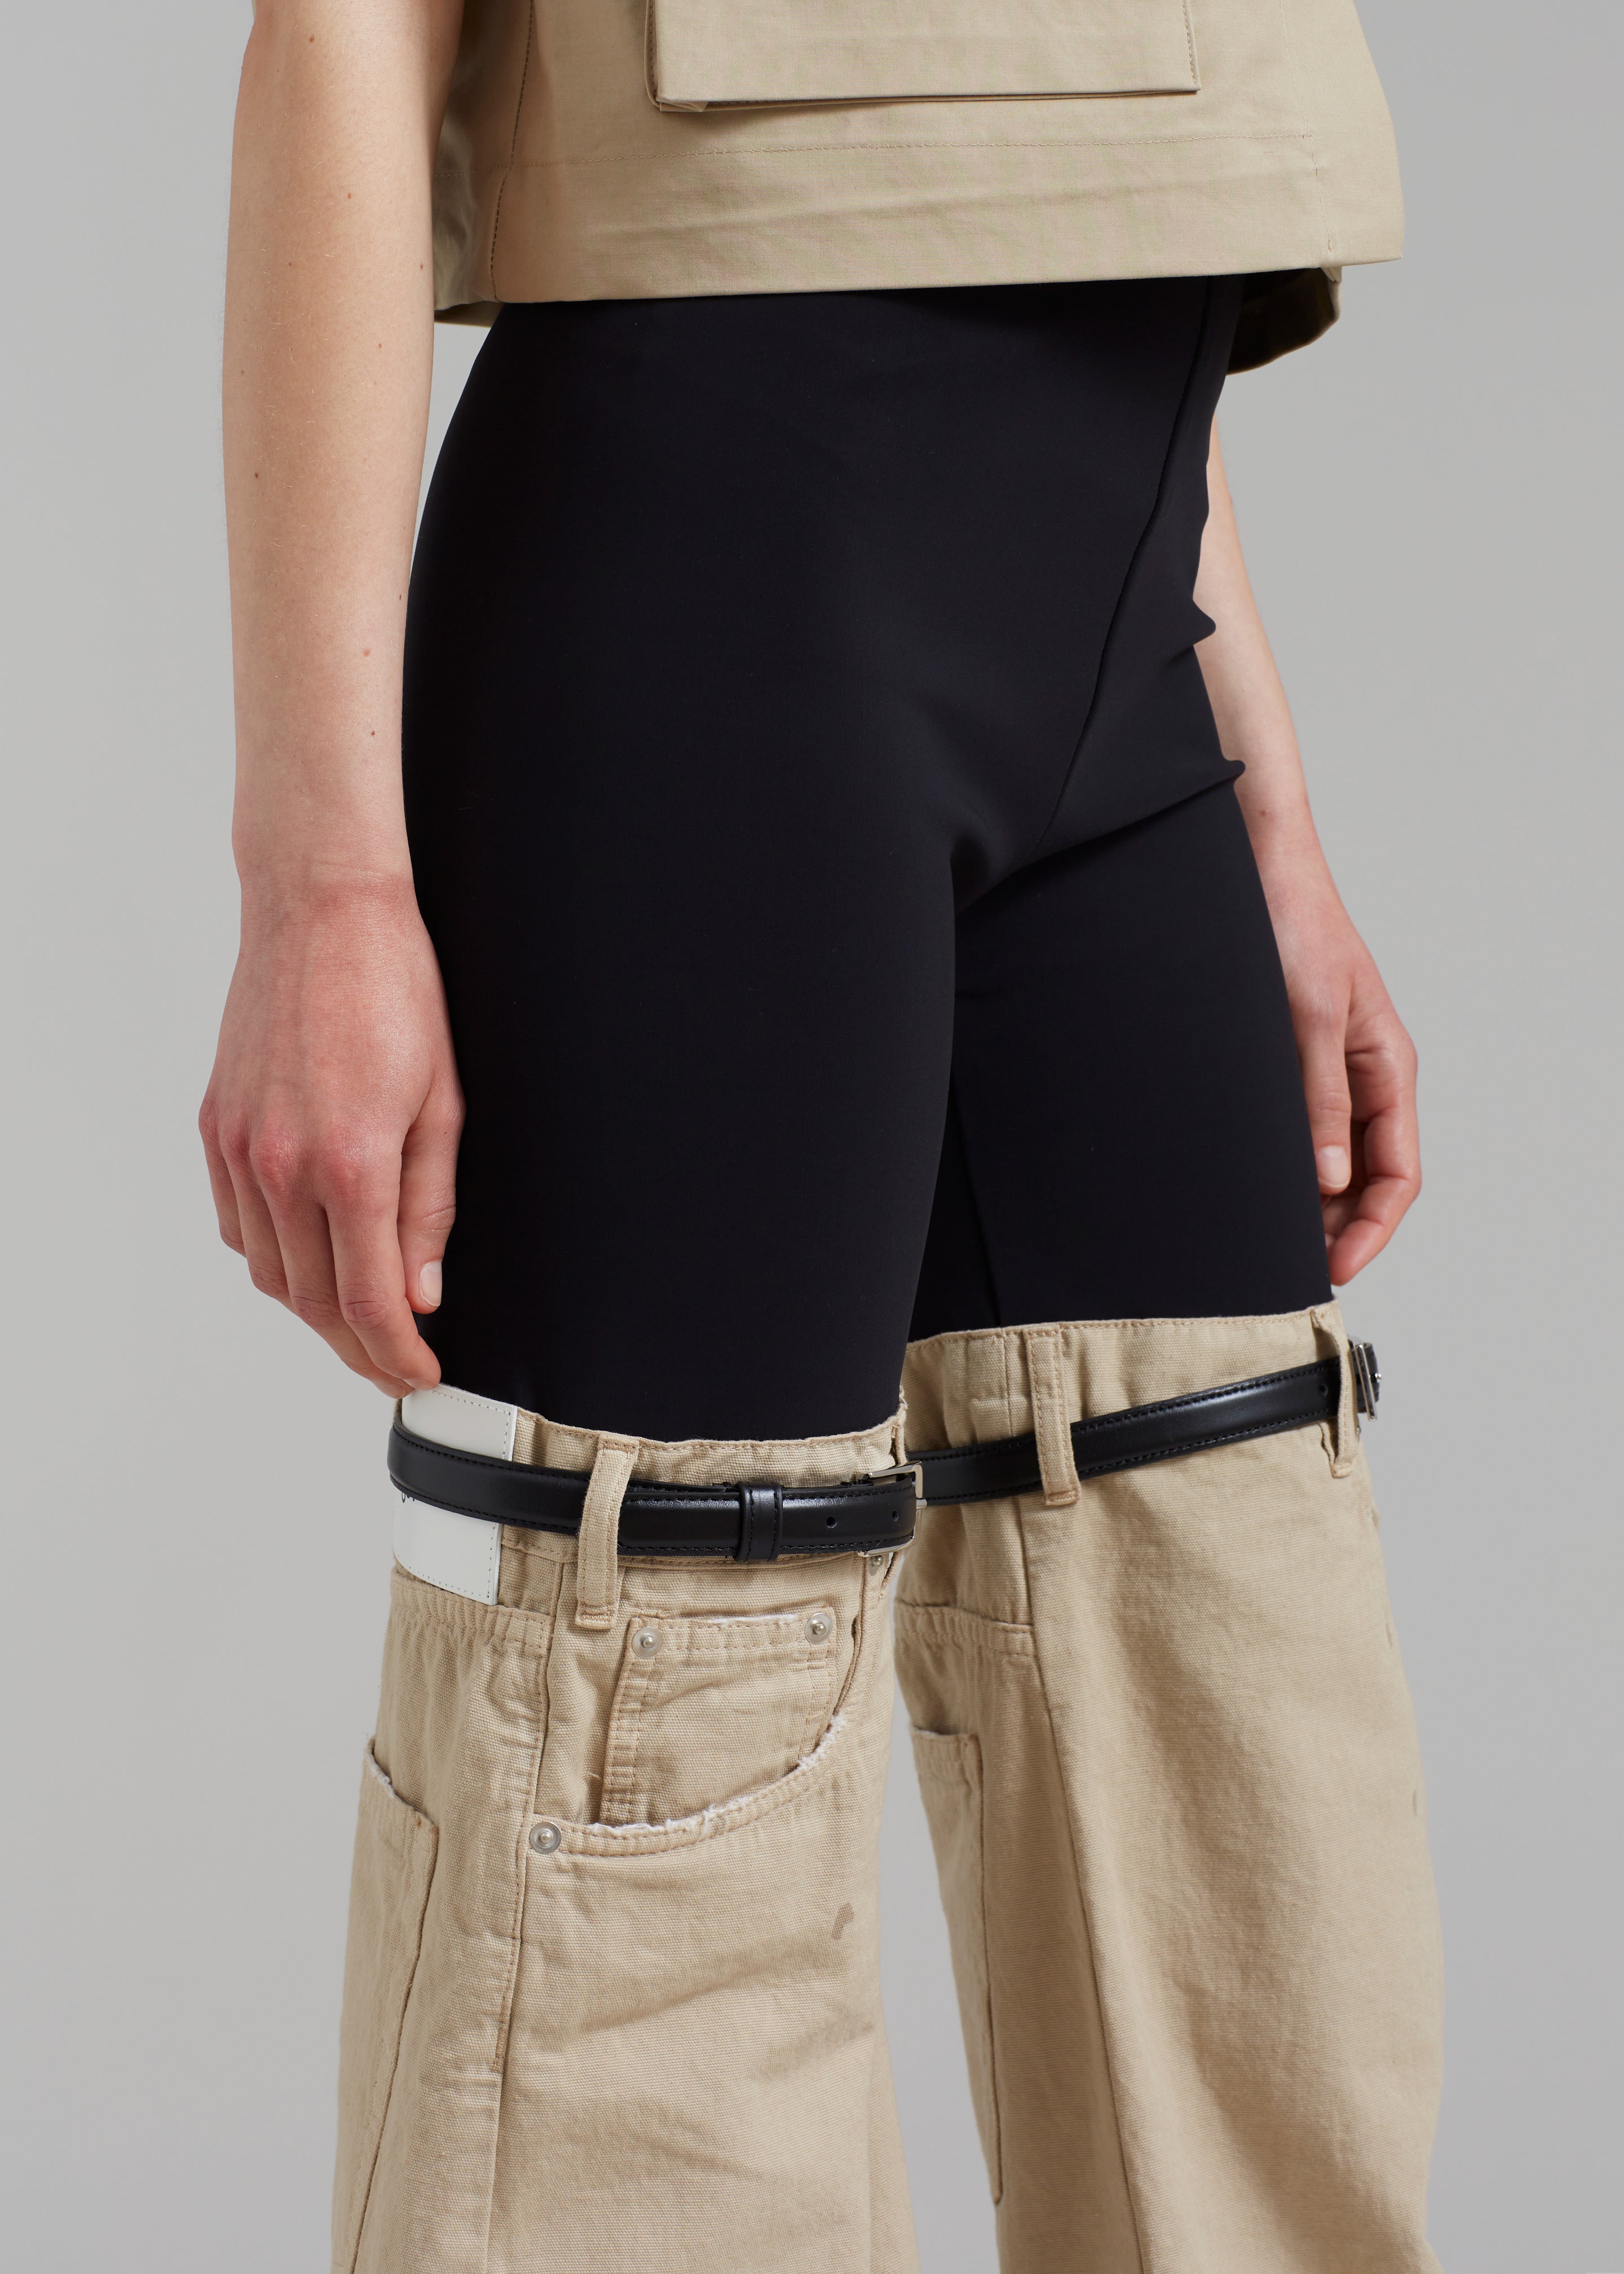 Coperni Hybrid Denim Trousers - Black/Beige - 4